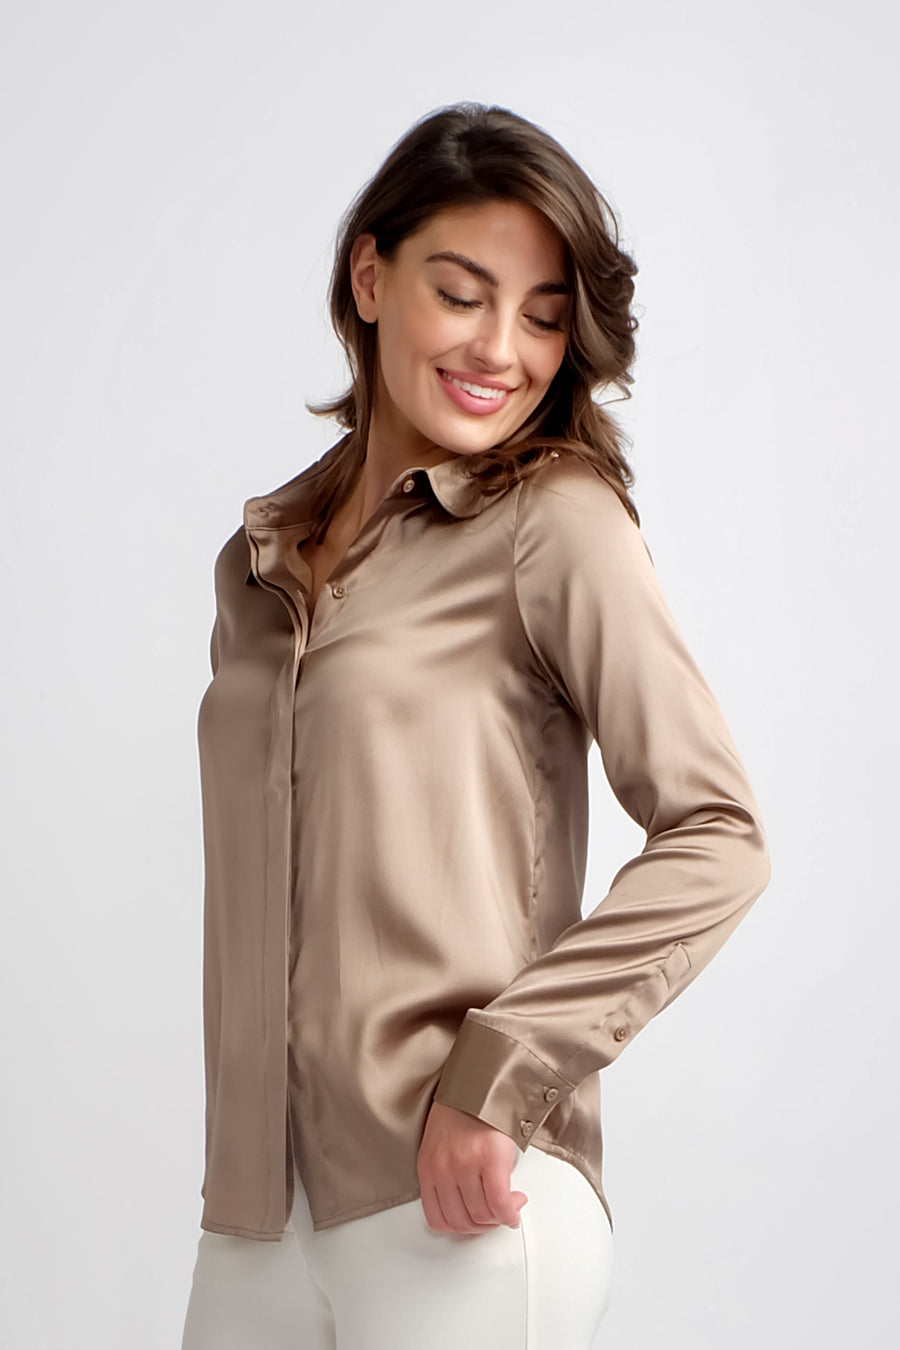 woman wearing long sleeve button up silk top